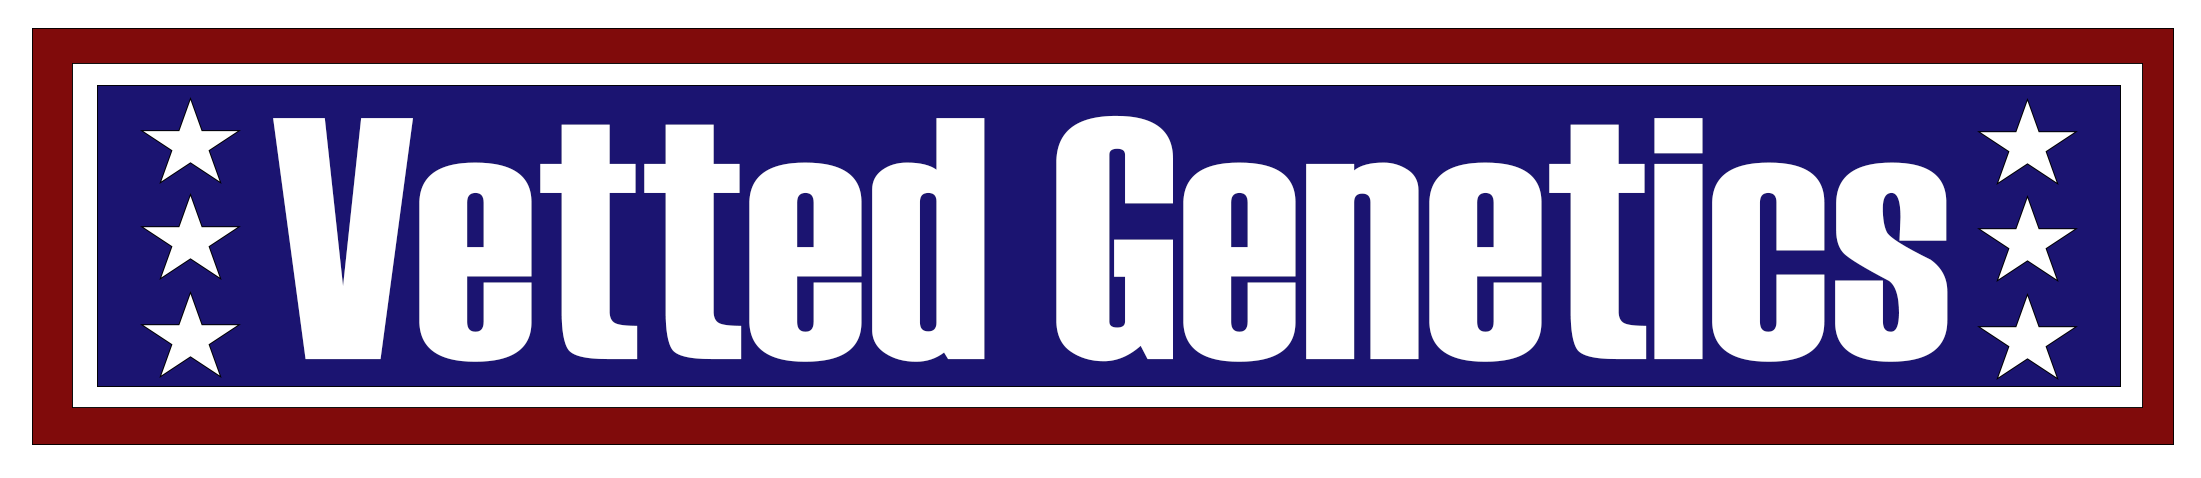 Vetted Genetics logo transparent